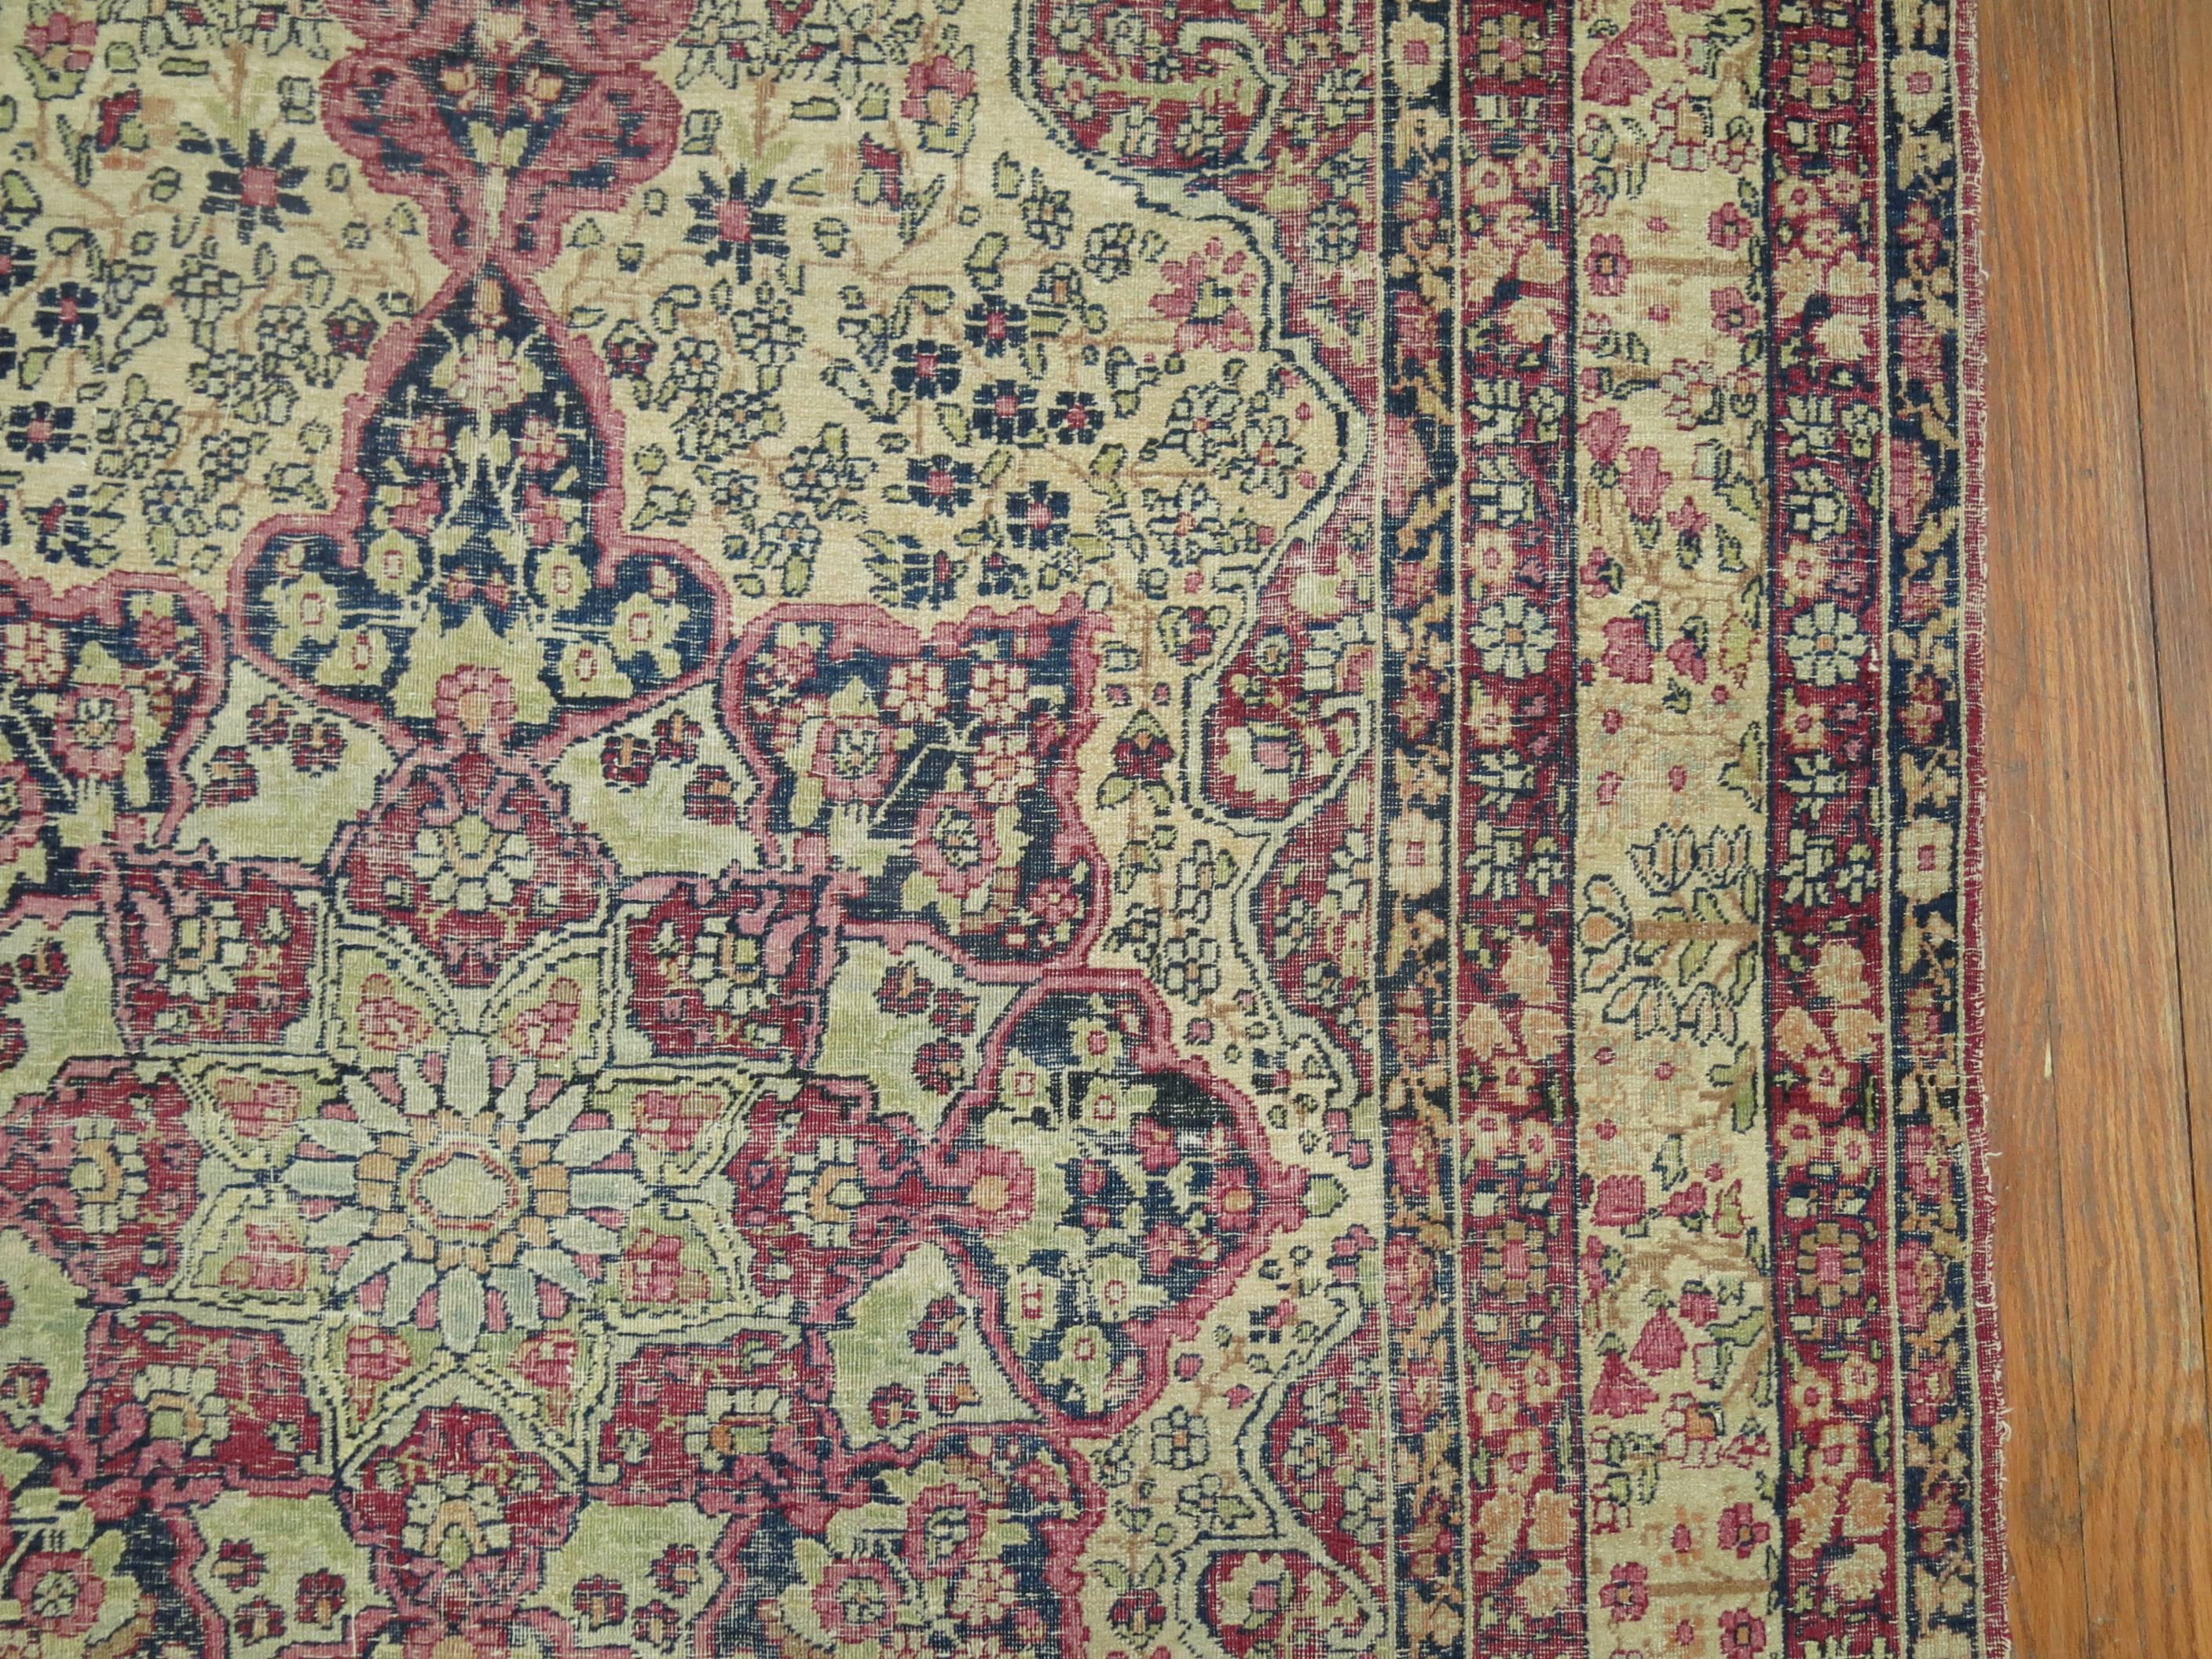 Highly decorative 19th century Persian Lavar Kermanshah rug.

4' x 6'4''